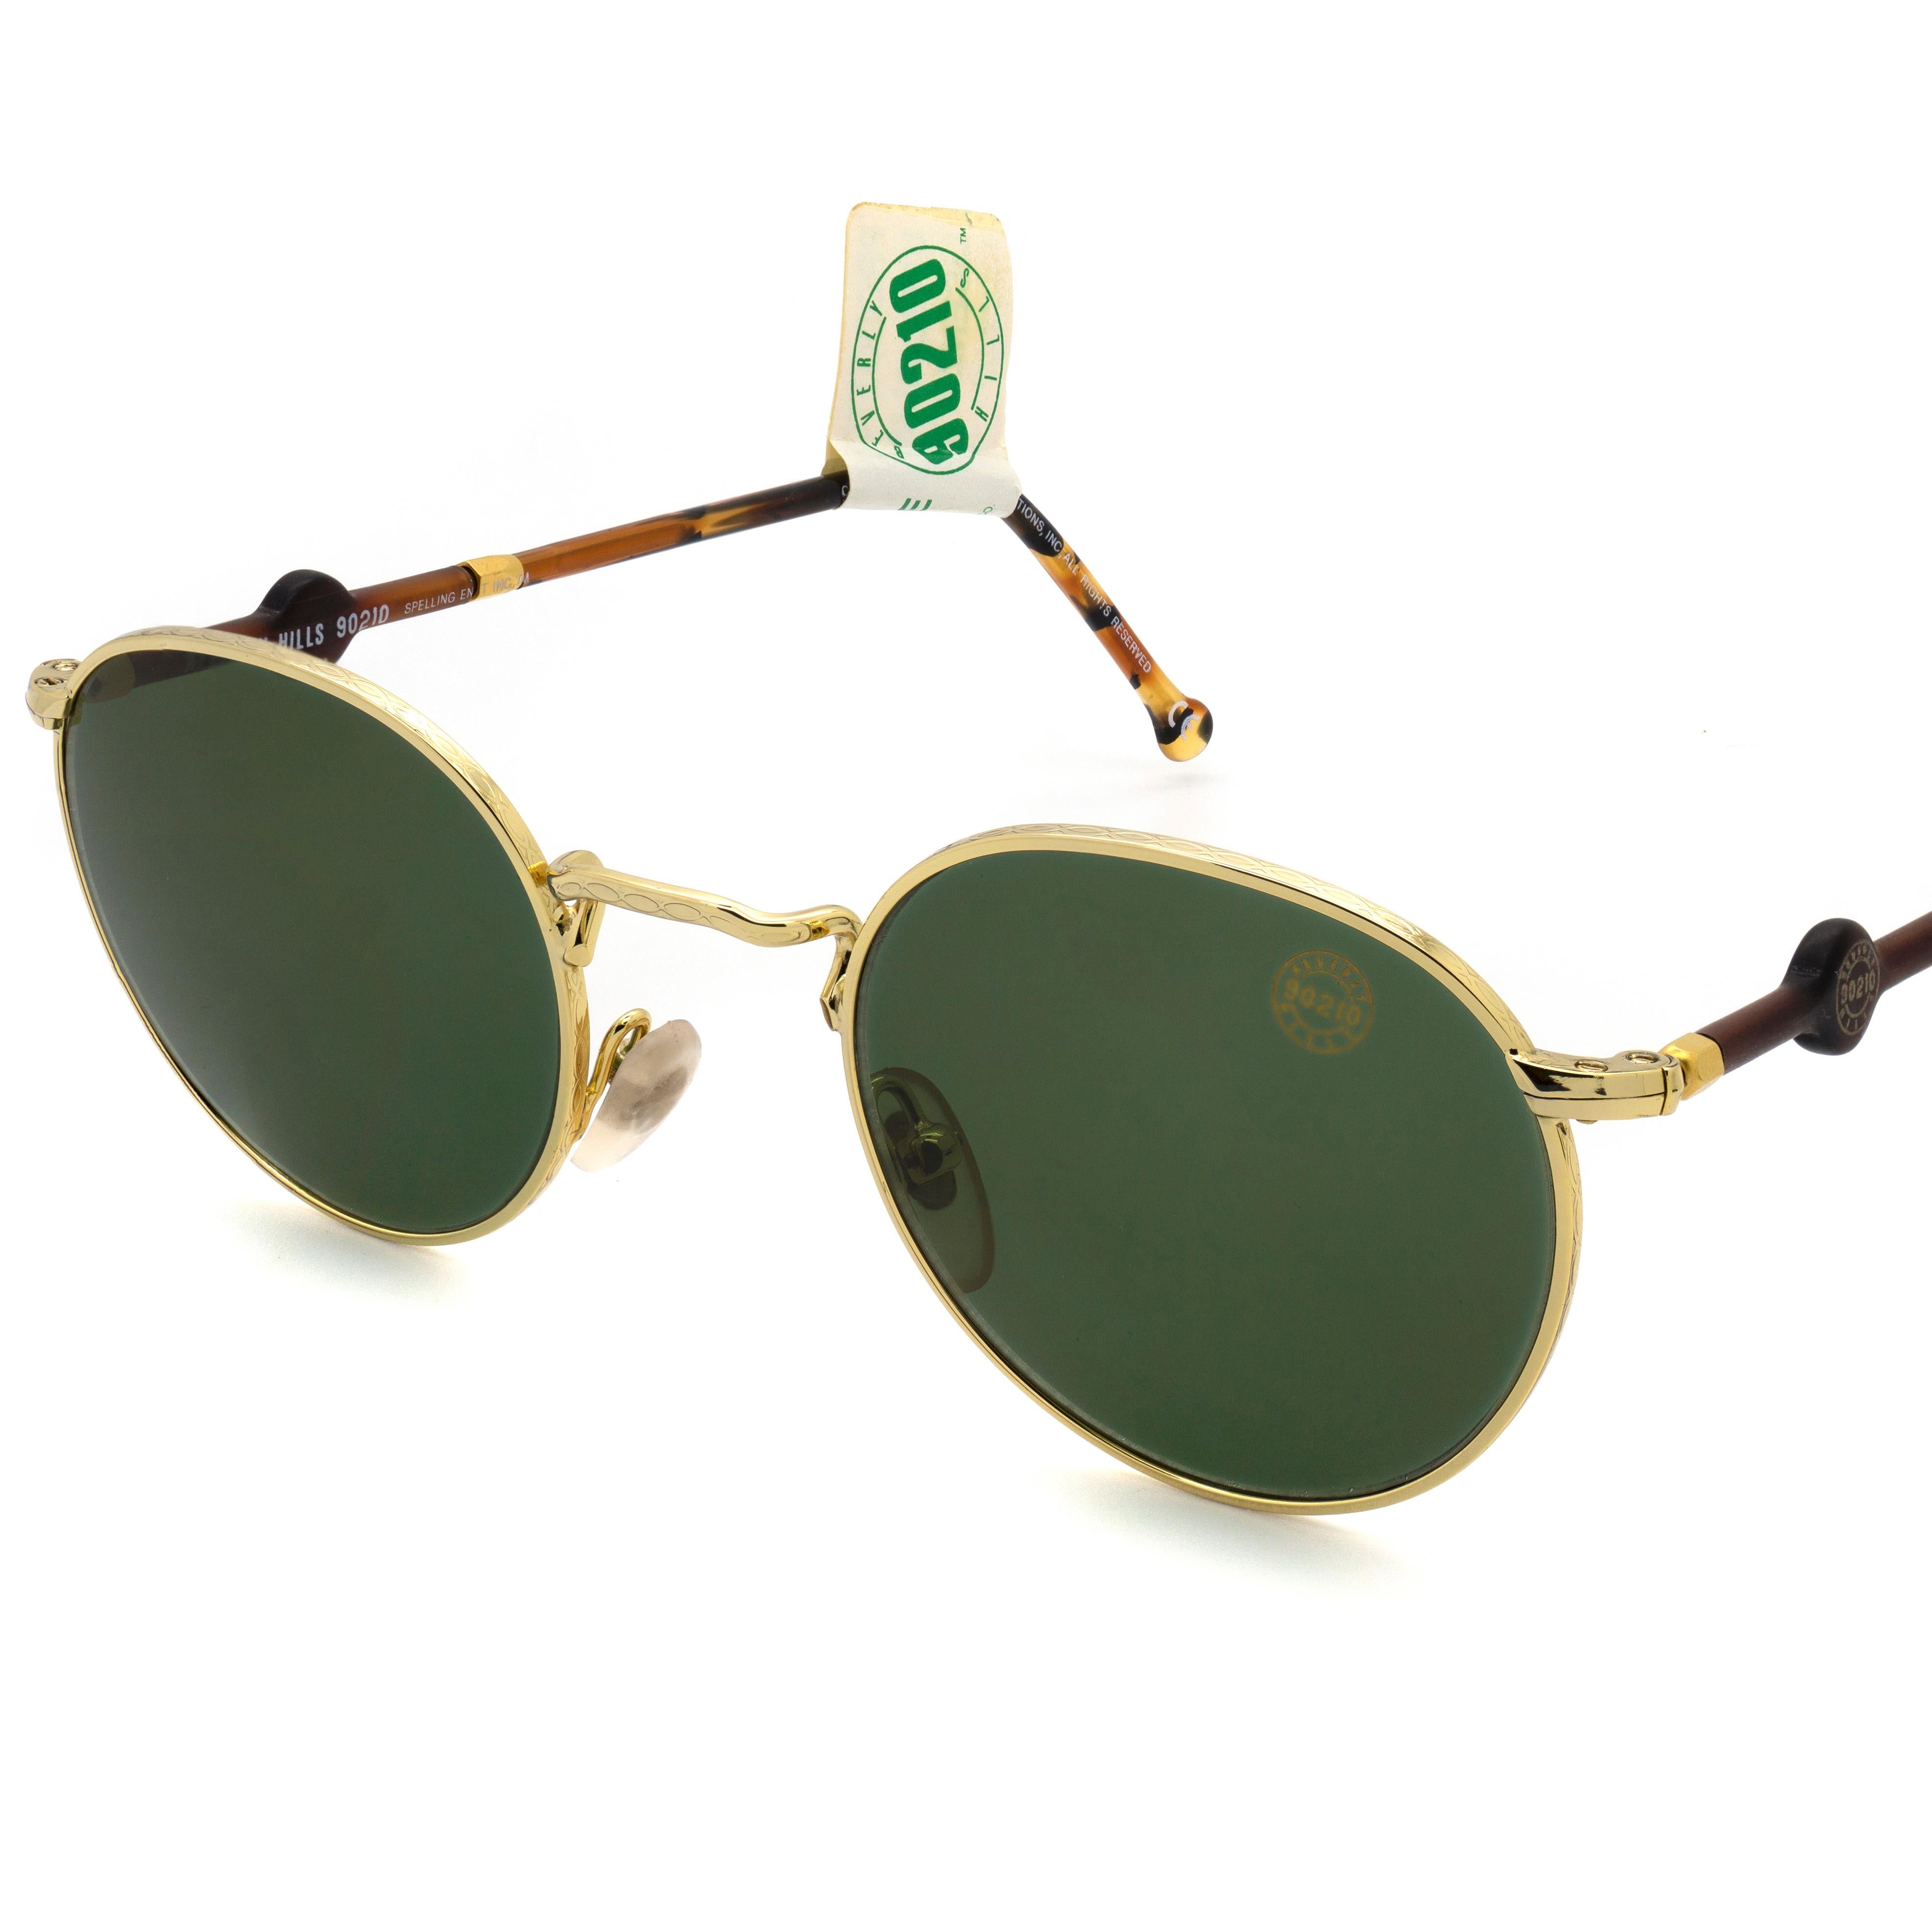 Black Vintage sunglasses by Dylan Beverly Hills 90210 For Sale